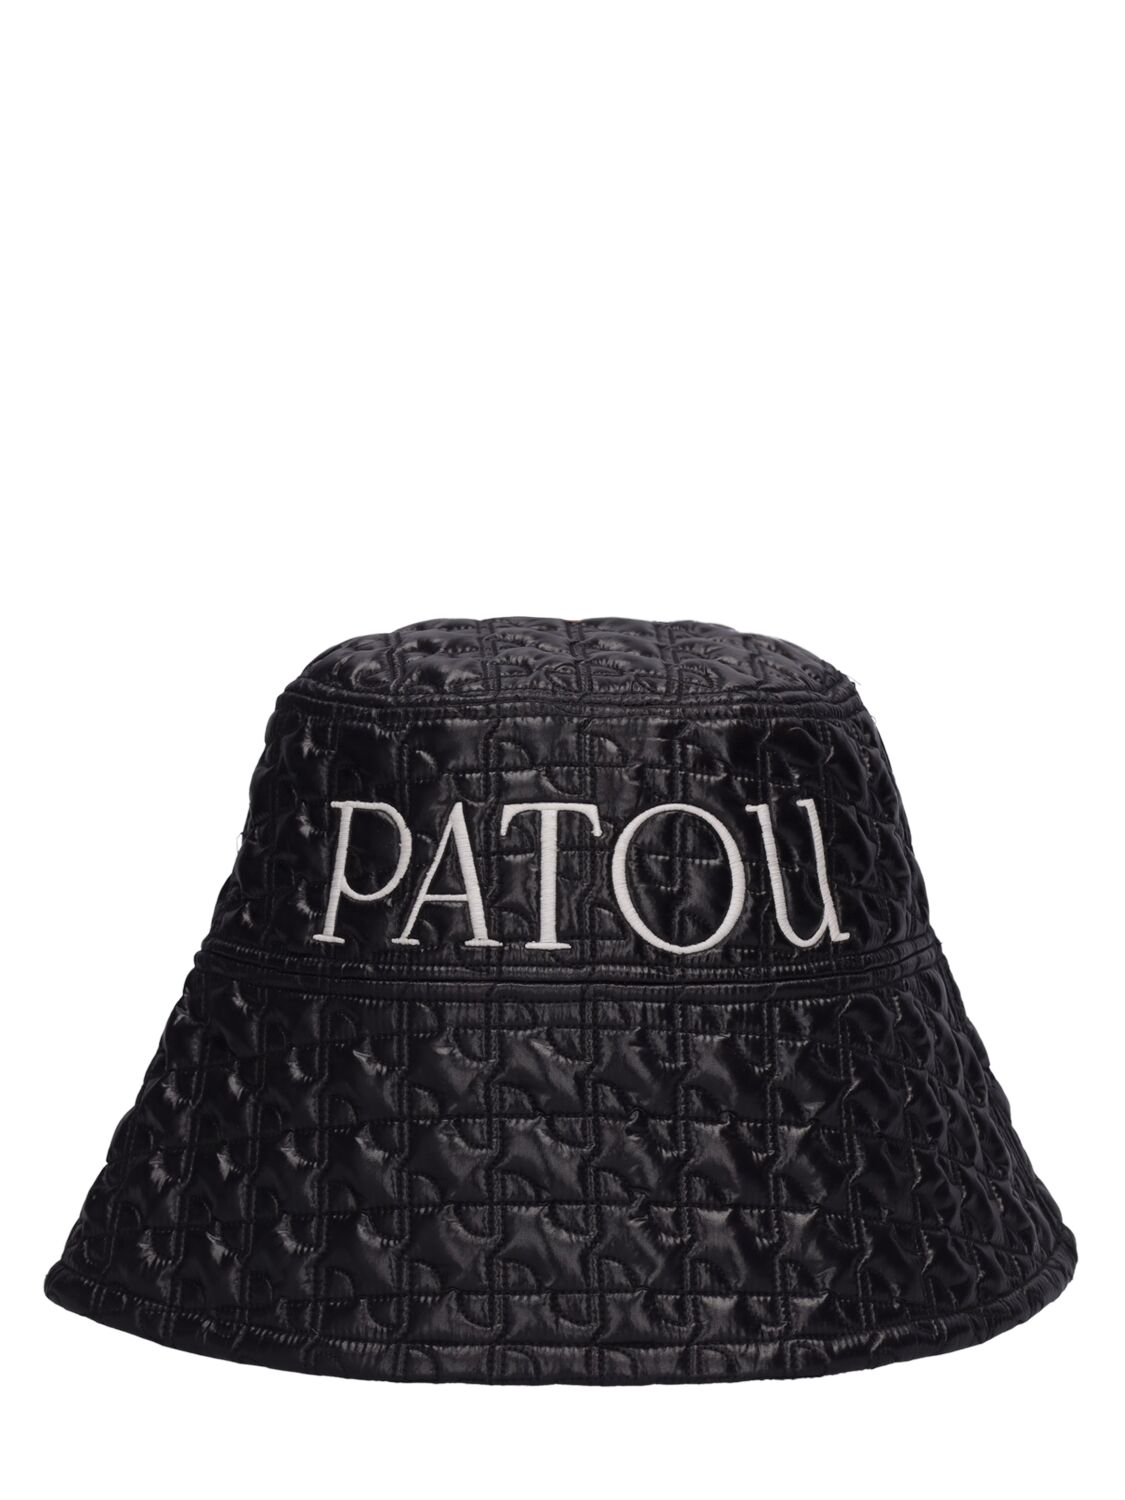 Patou Logo Light Eco Tech Bucket Hat